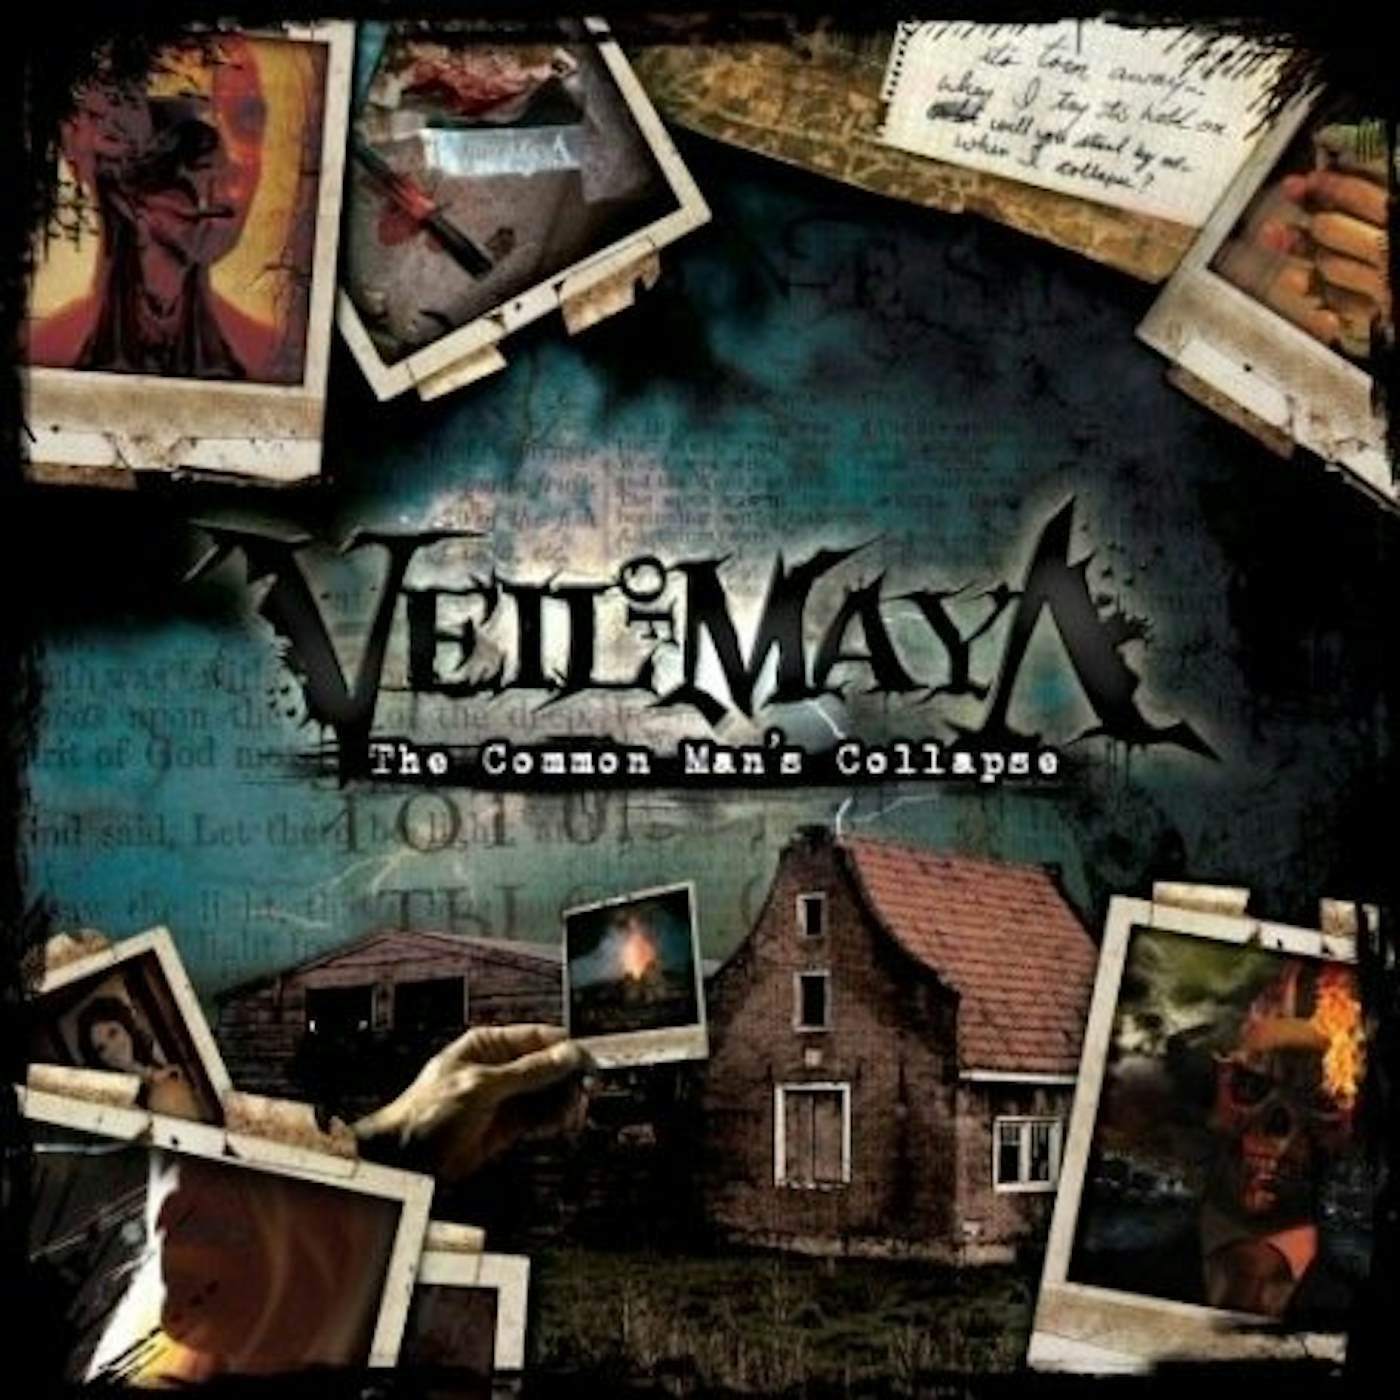 Veil Of Maya COMMON MAN'S COLLAPSE CD